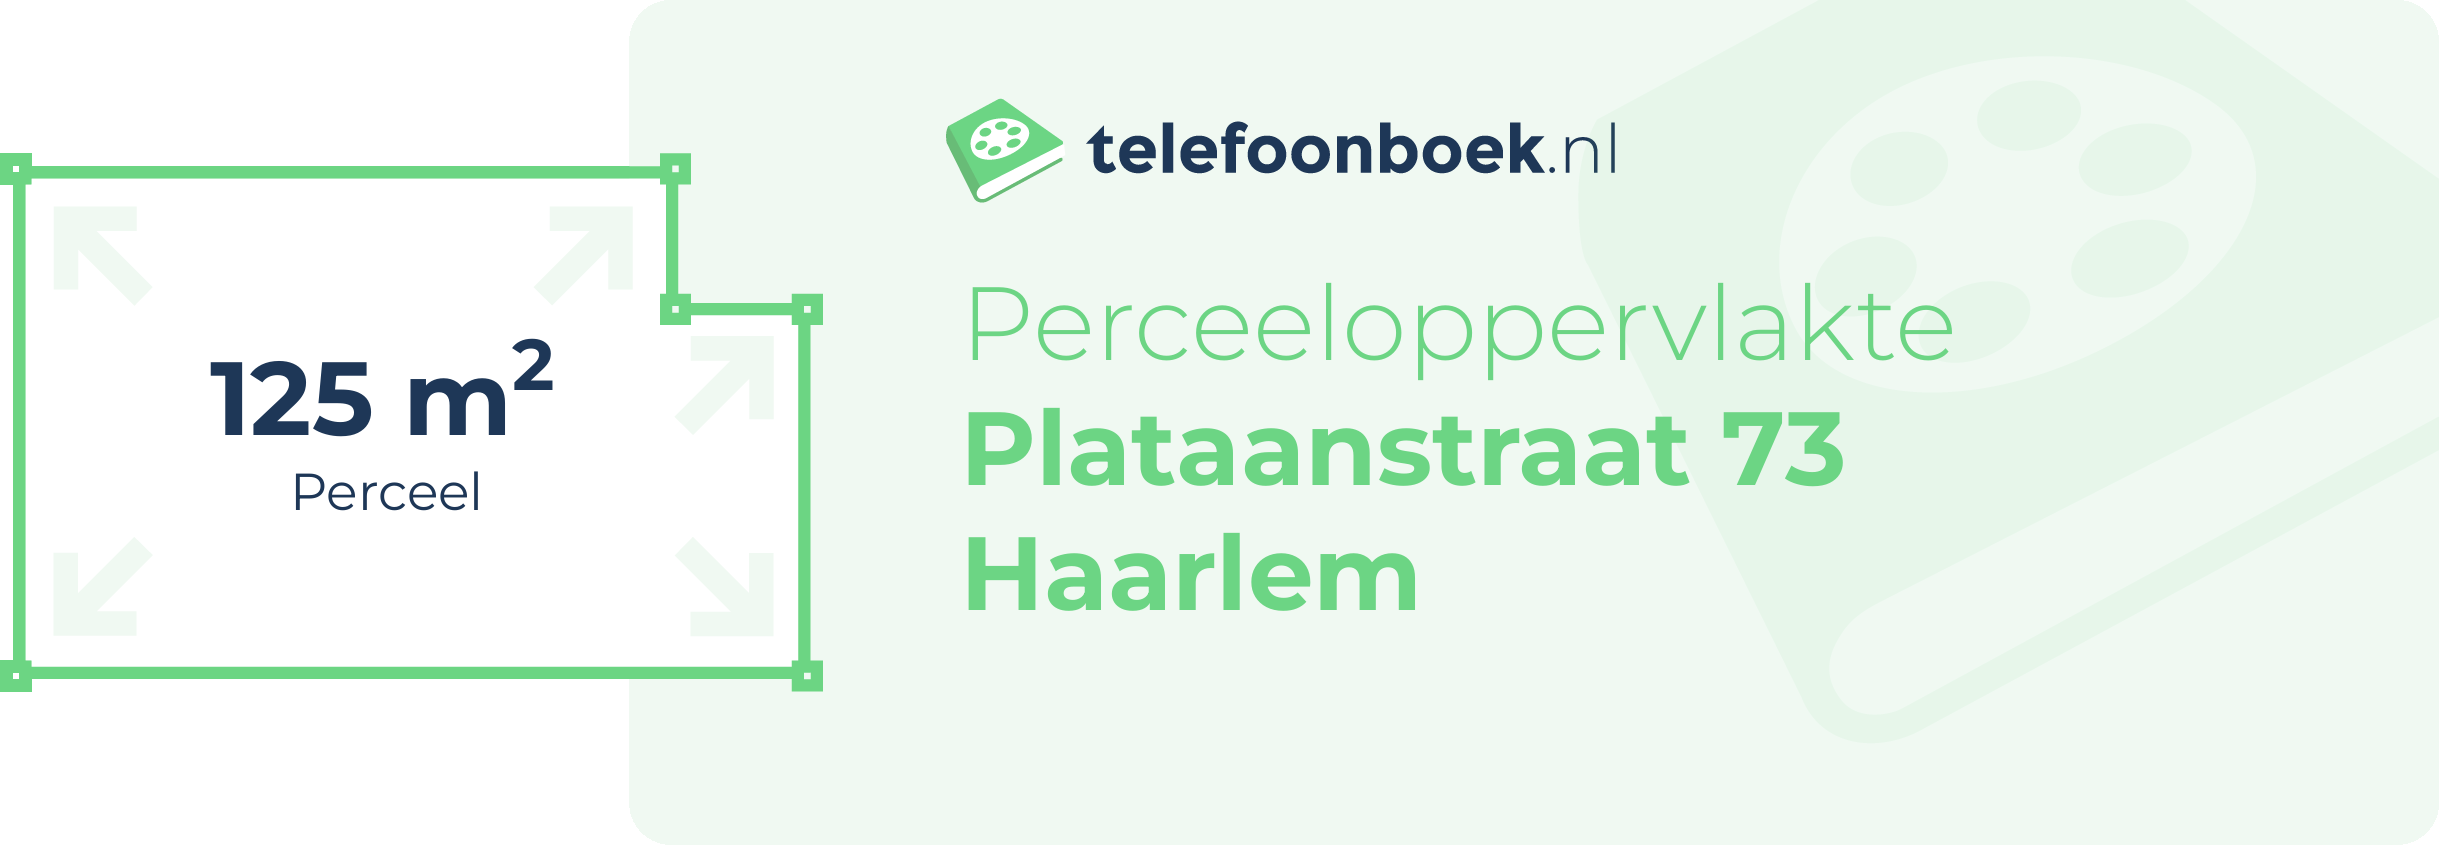 Perceeloppervlakte Plataanstraat 73 Haarlem